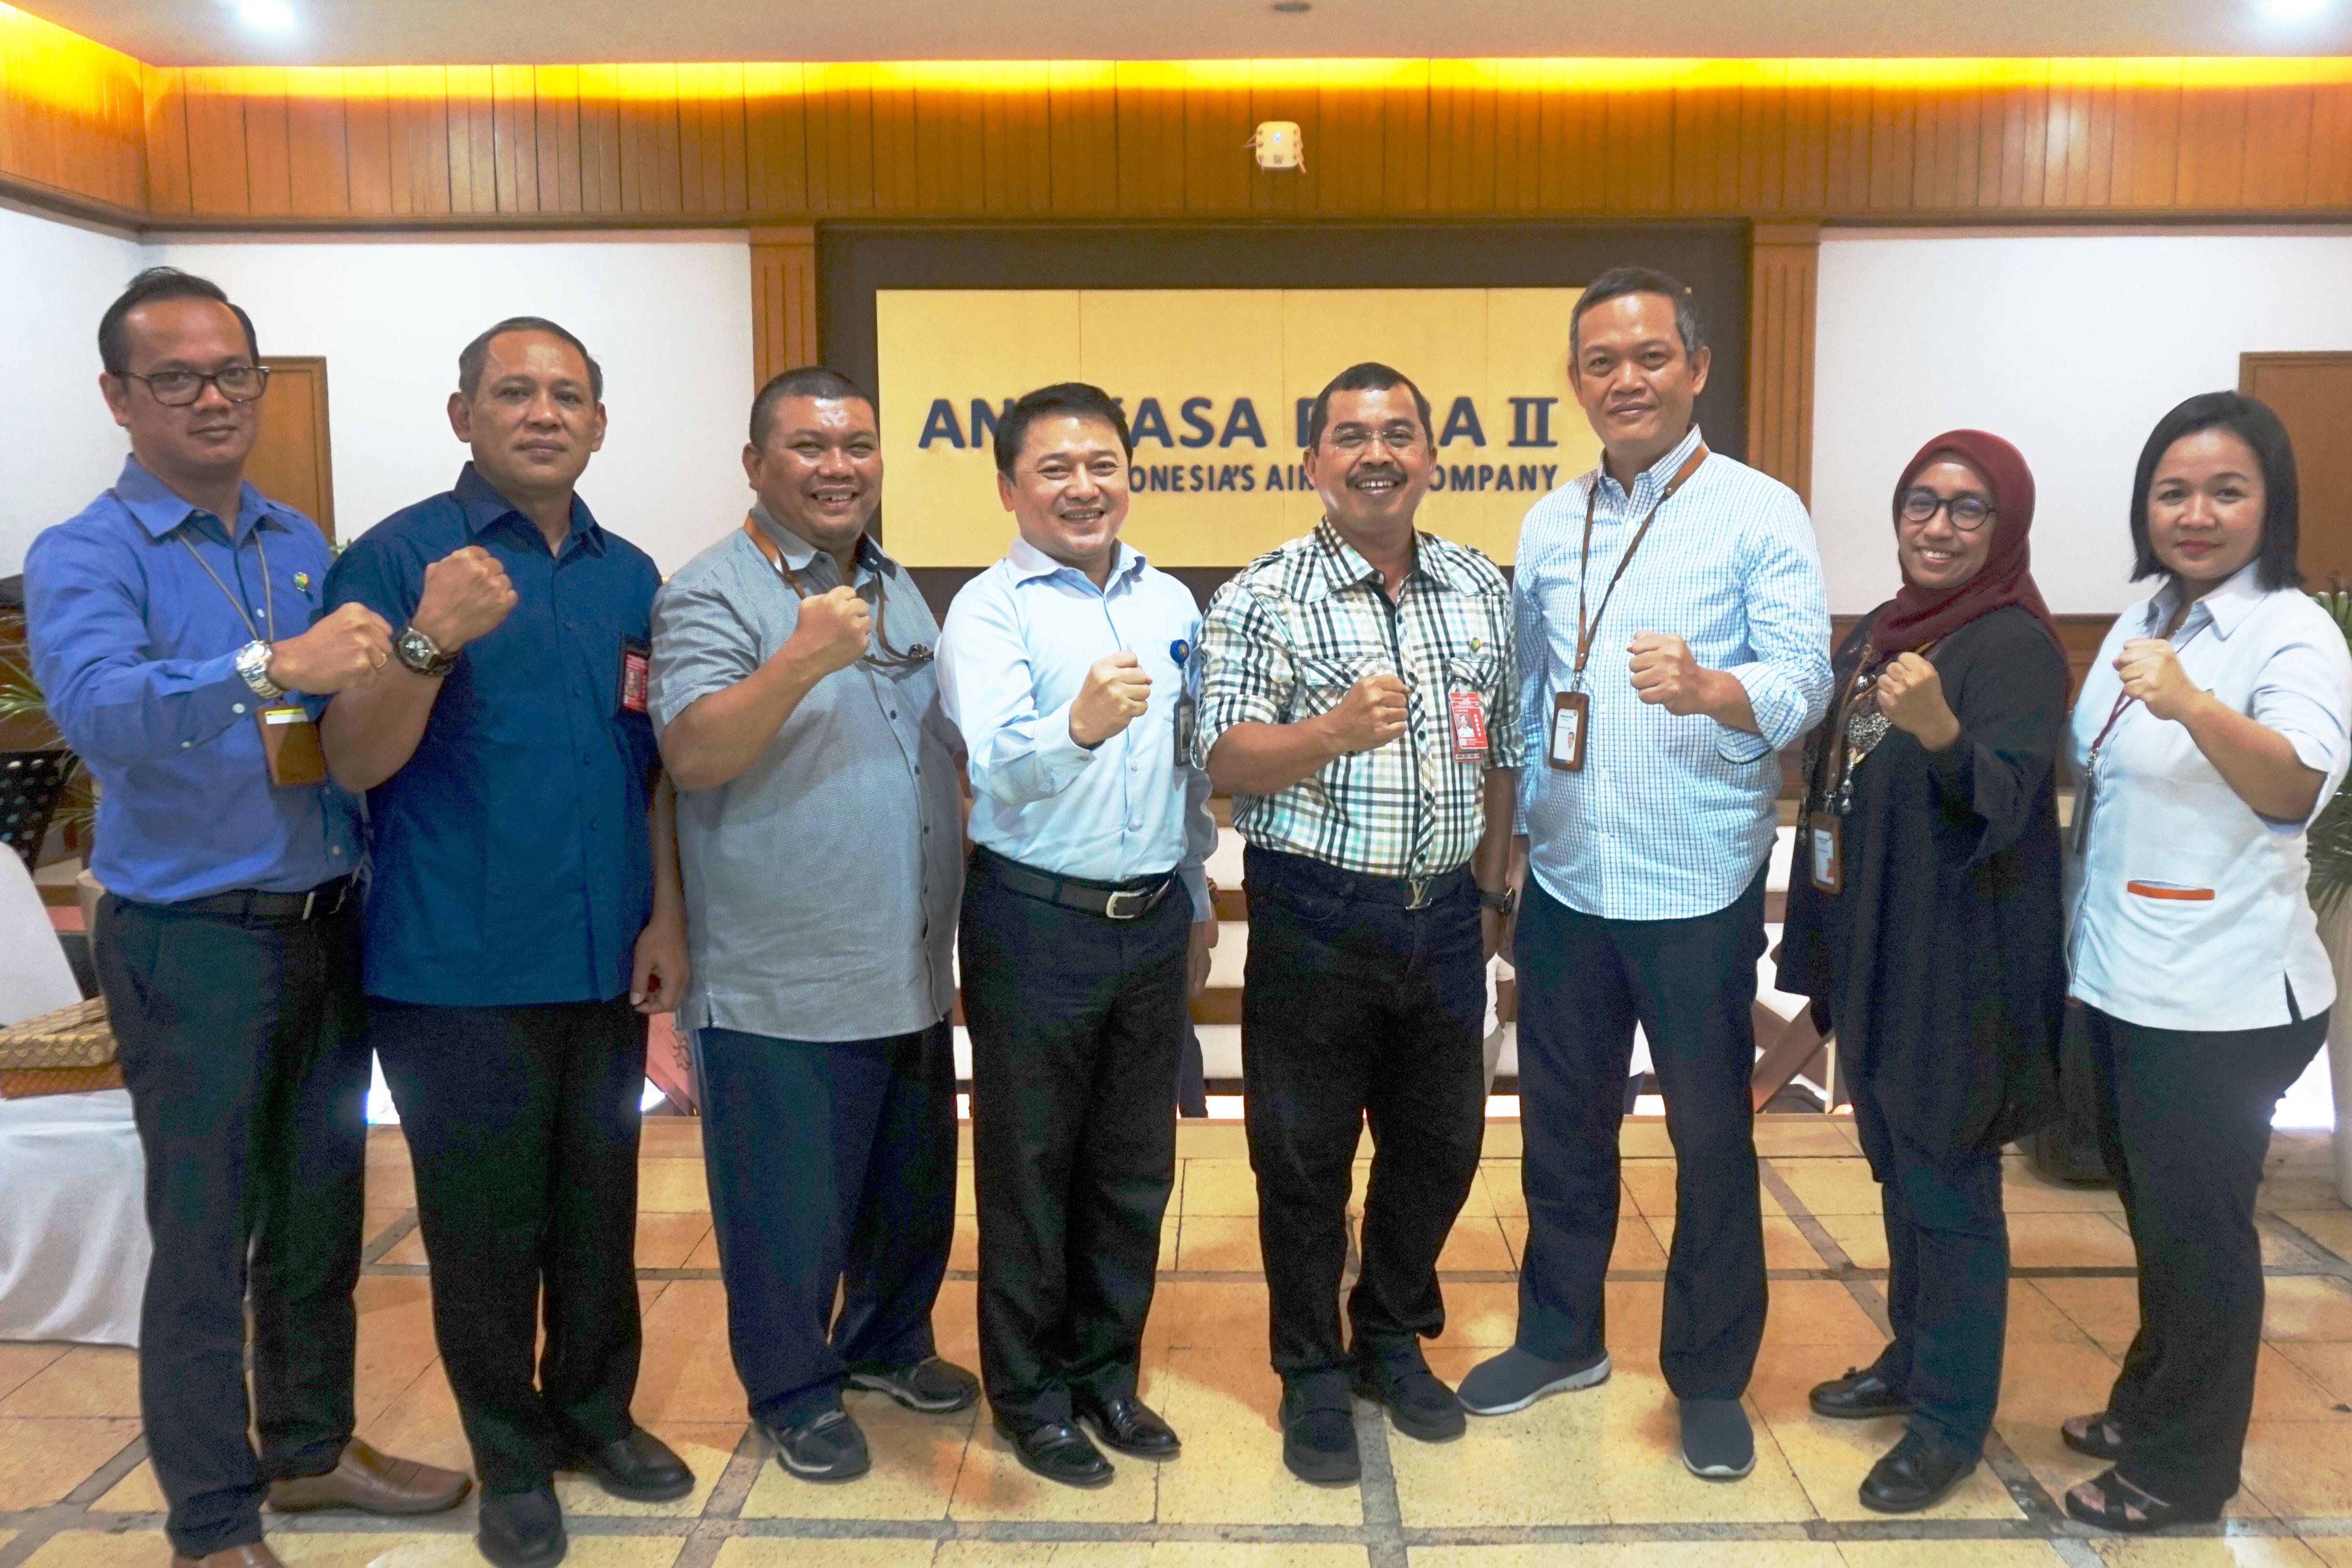  new management representative of pt angkasa pura solusi at halim perdanakusuma international airport